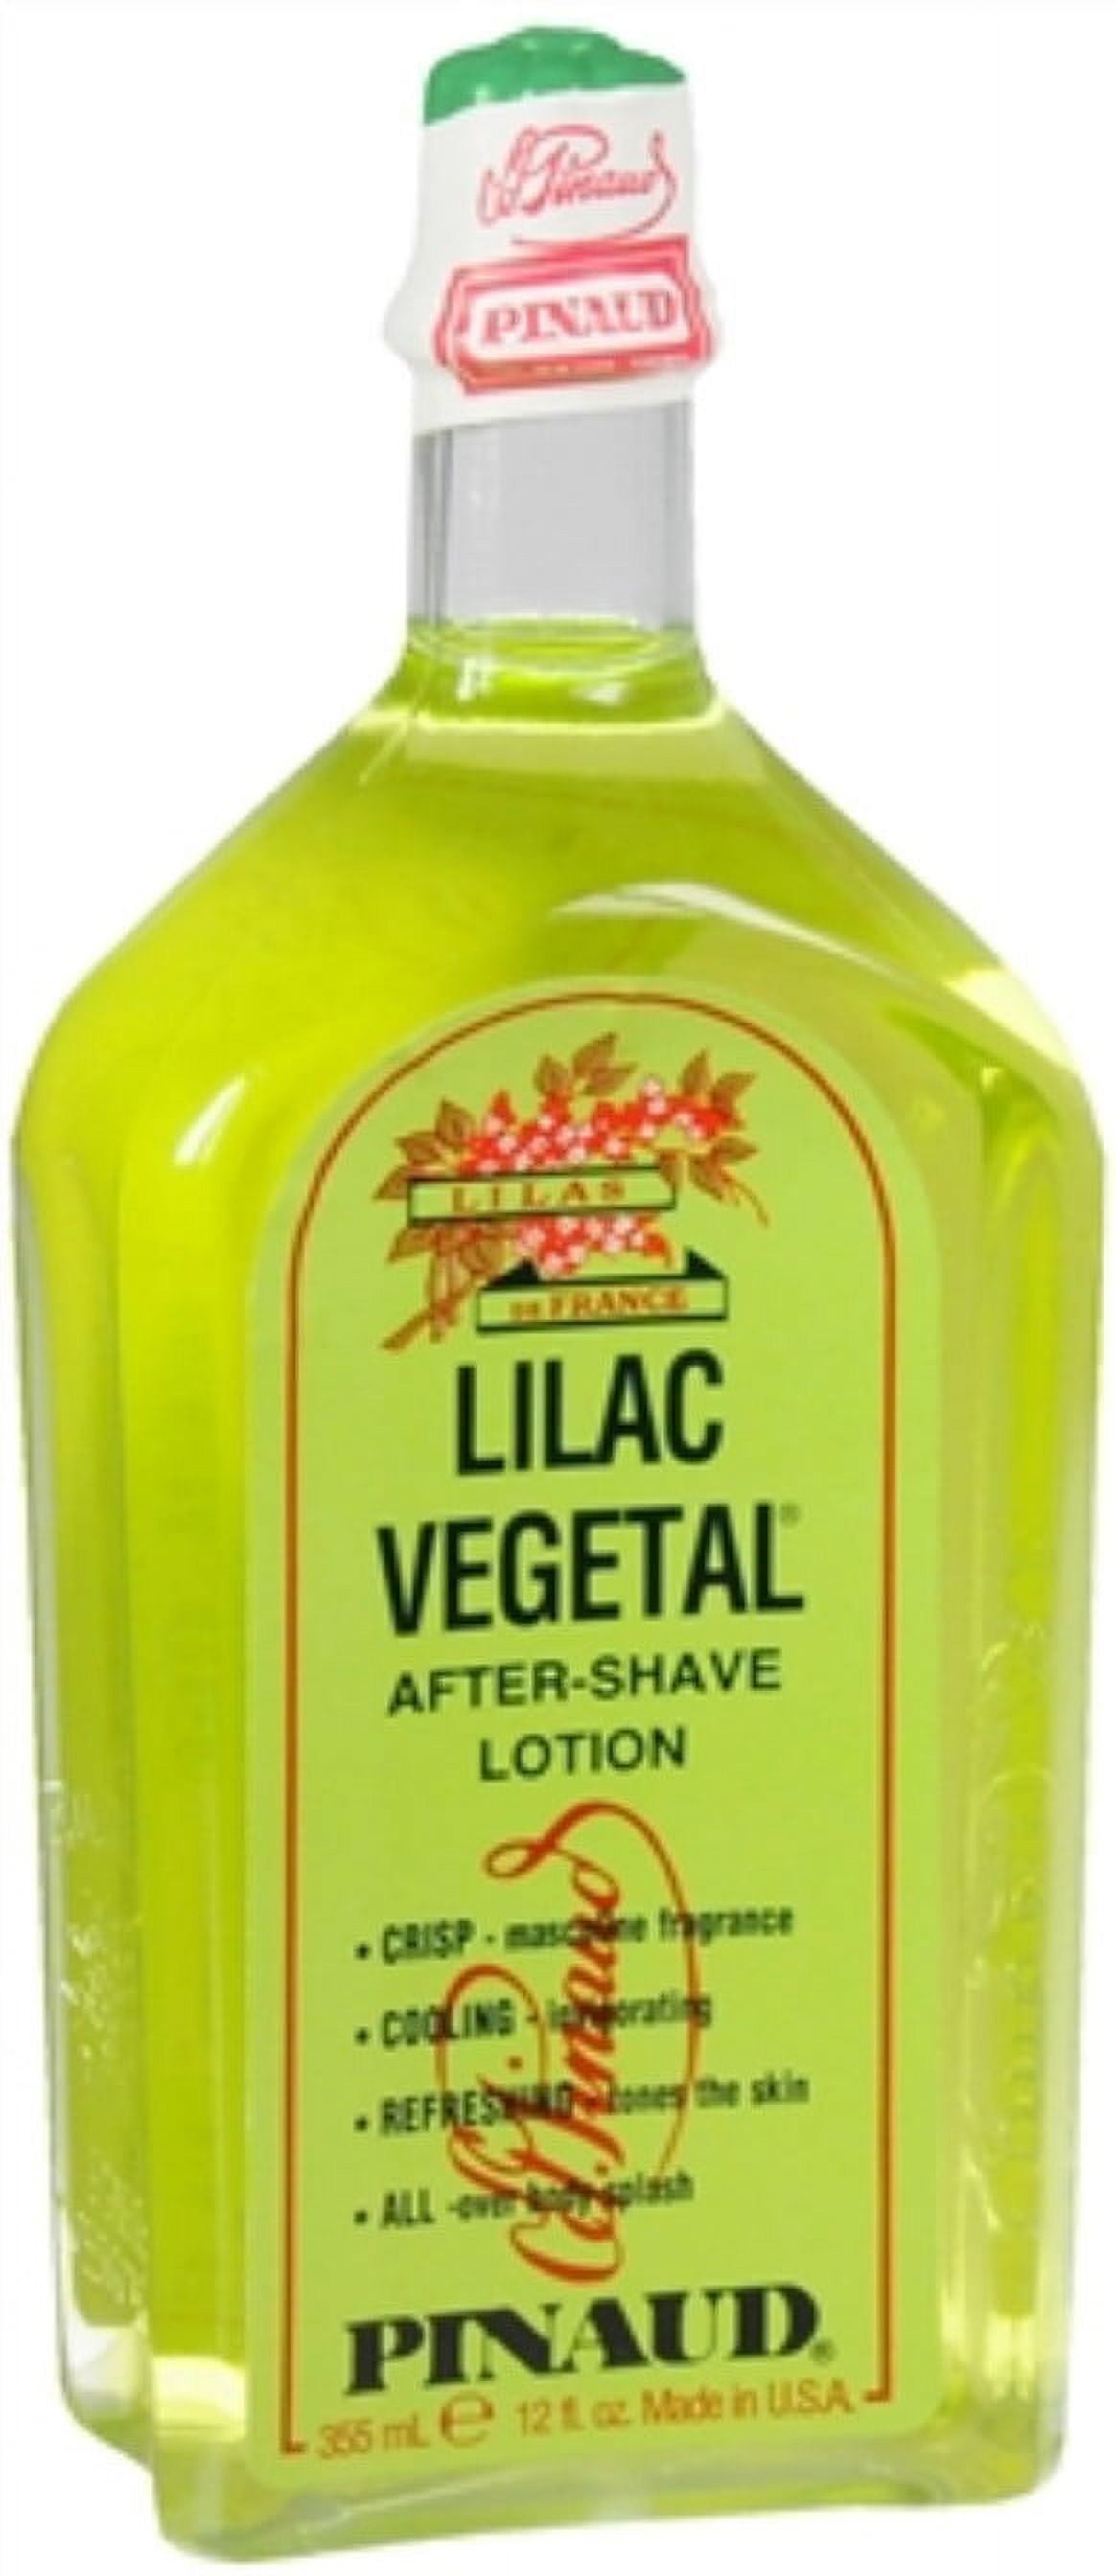 Pinaud Lilac Vegetal After-Shave Lotion 12 oz - Walmart.com